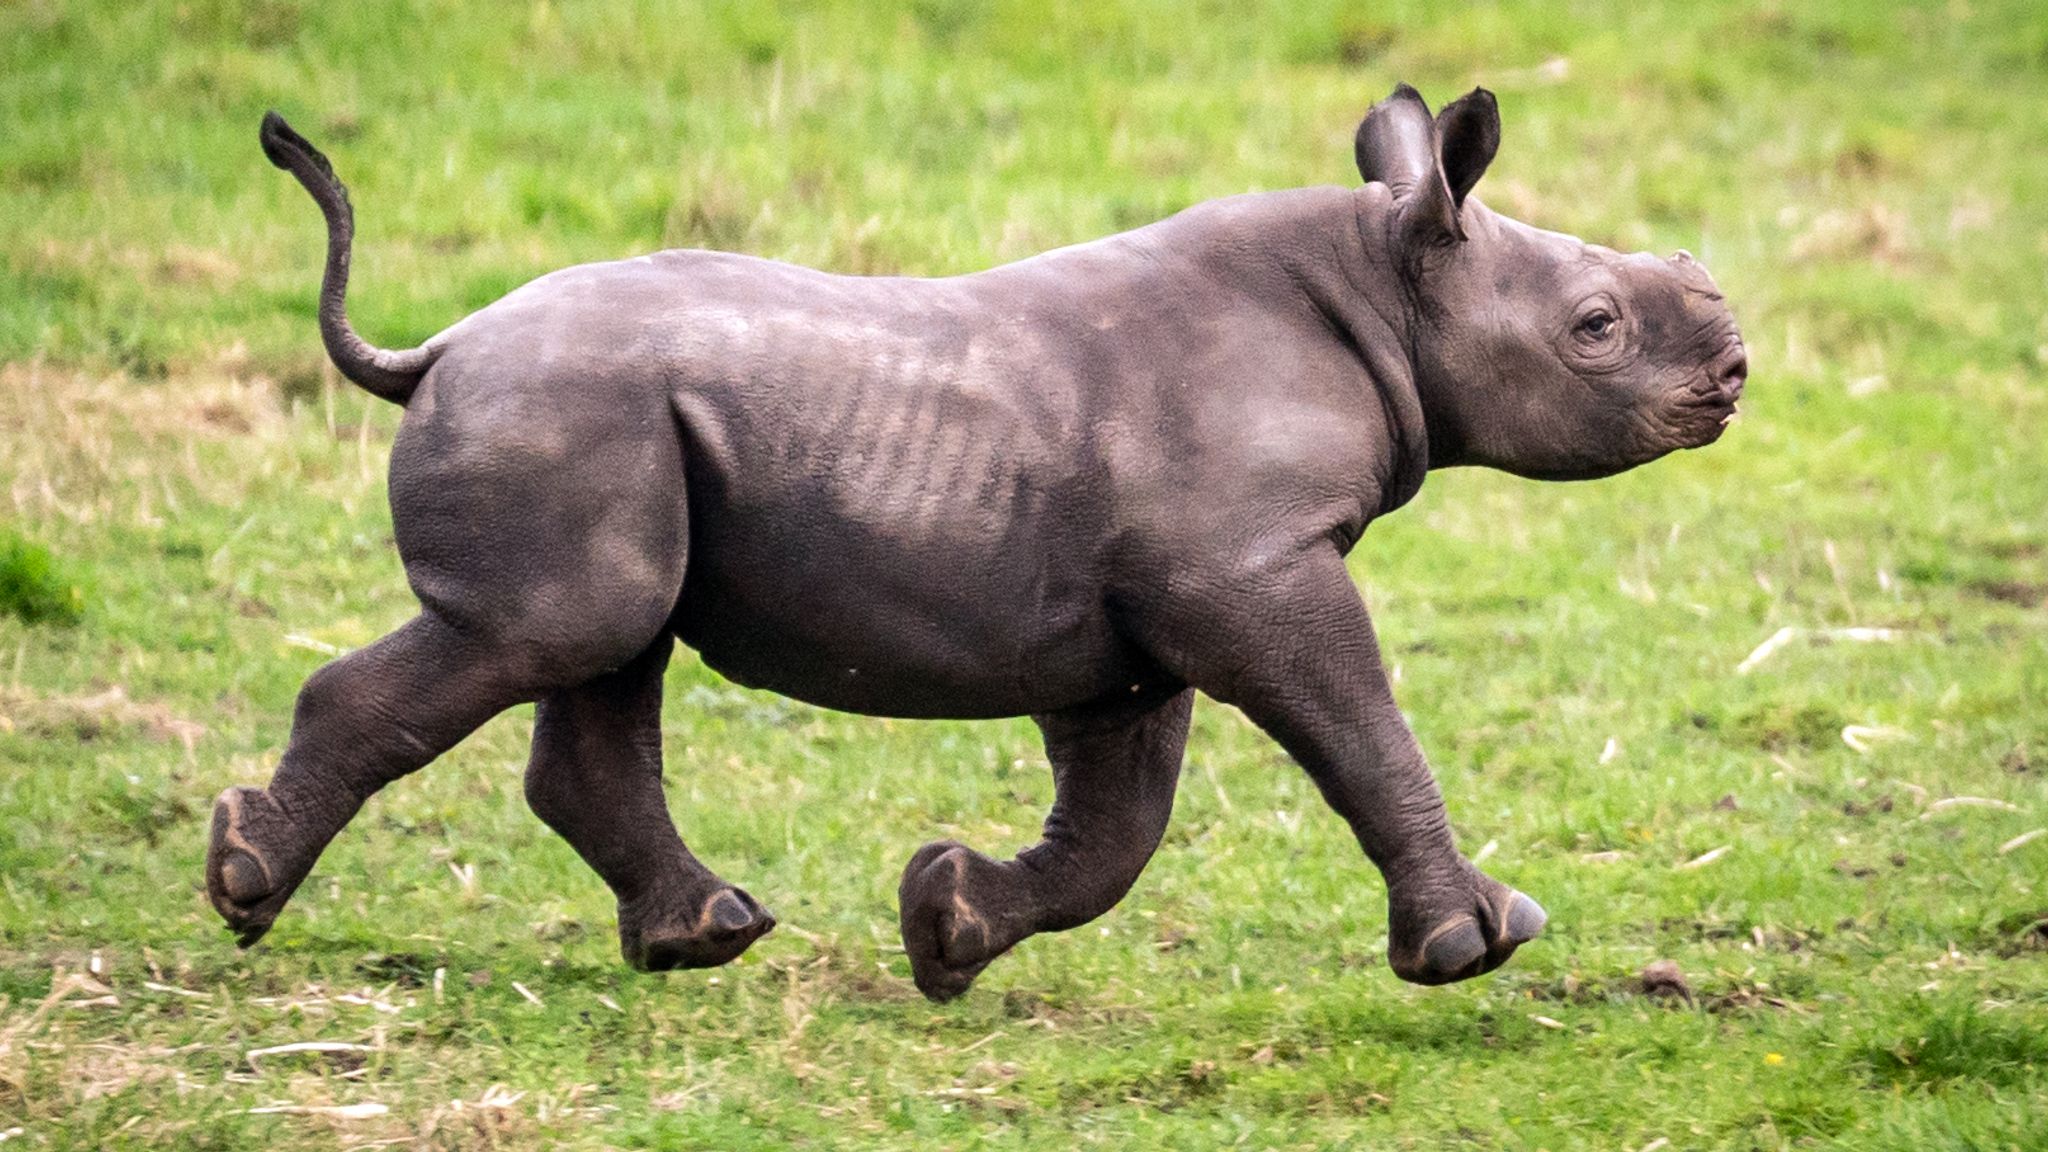 Critically endangered black rhino baby born in UK wildlife park